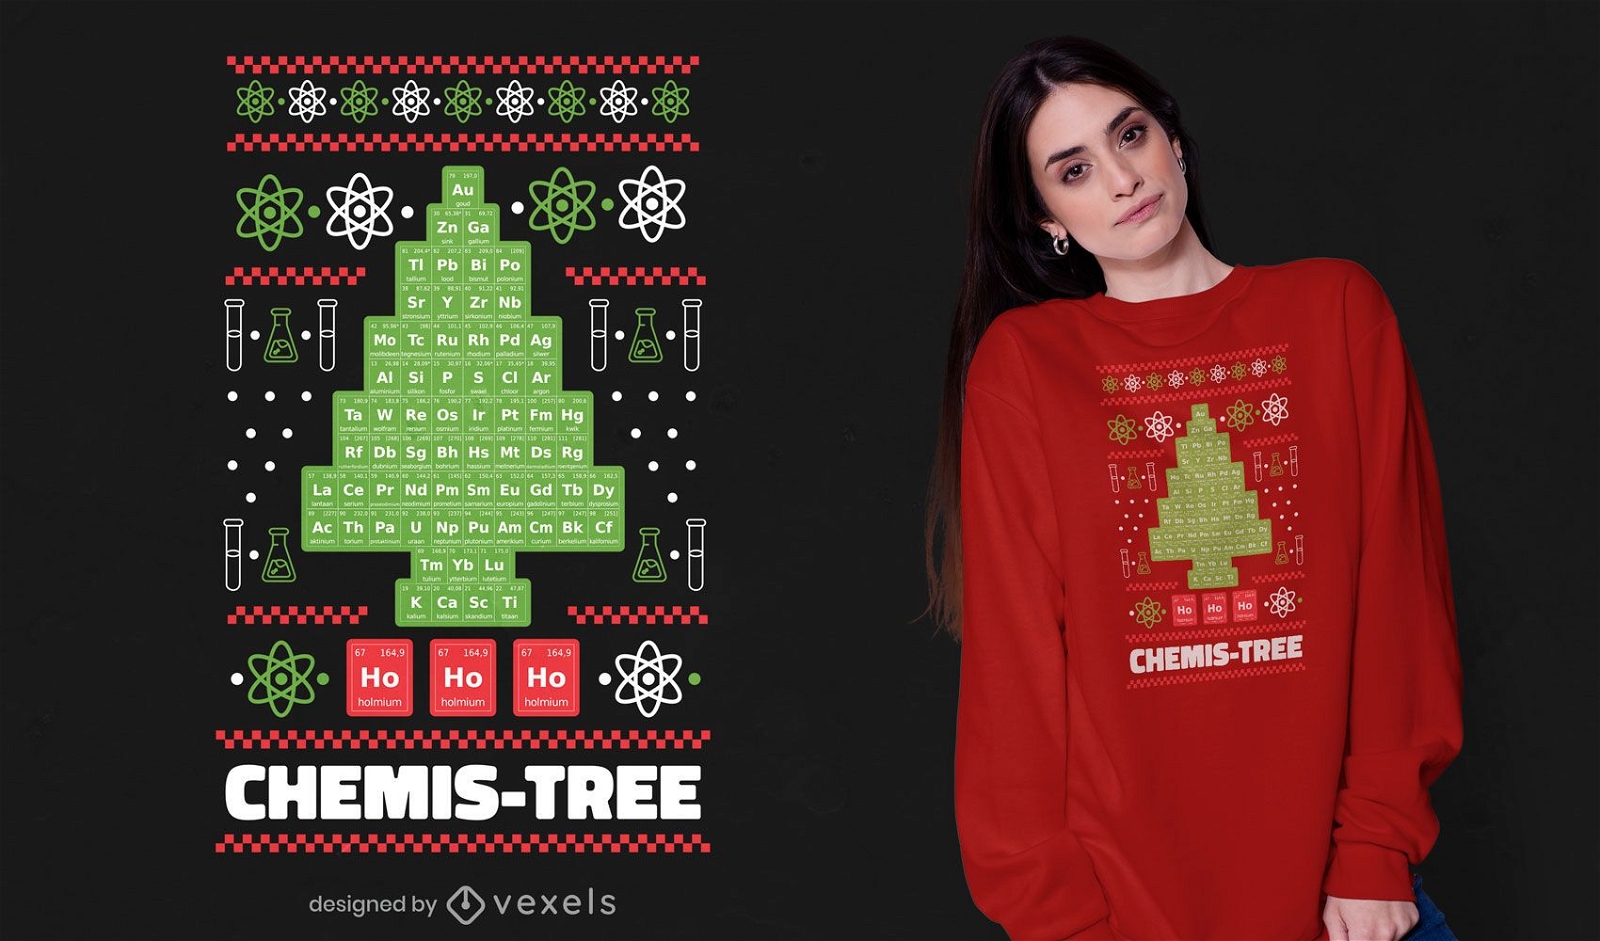 Chemis tree t-shirt design